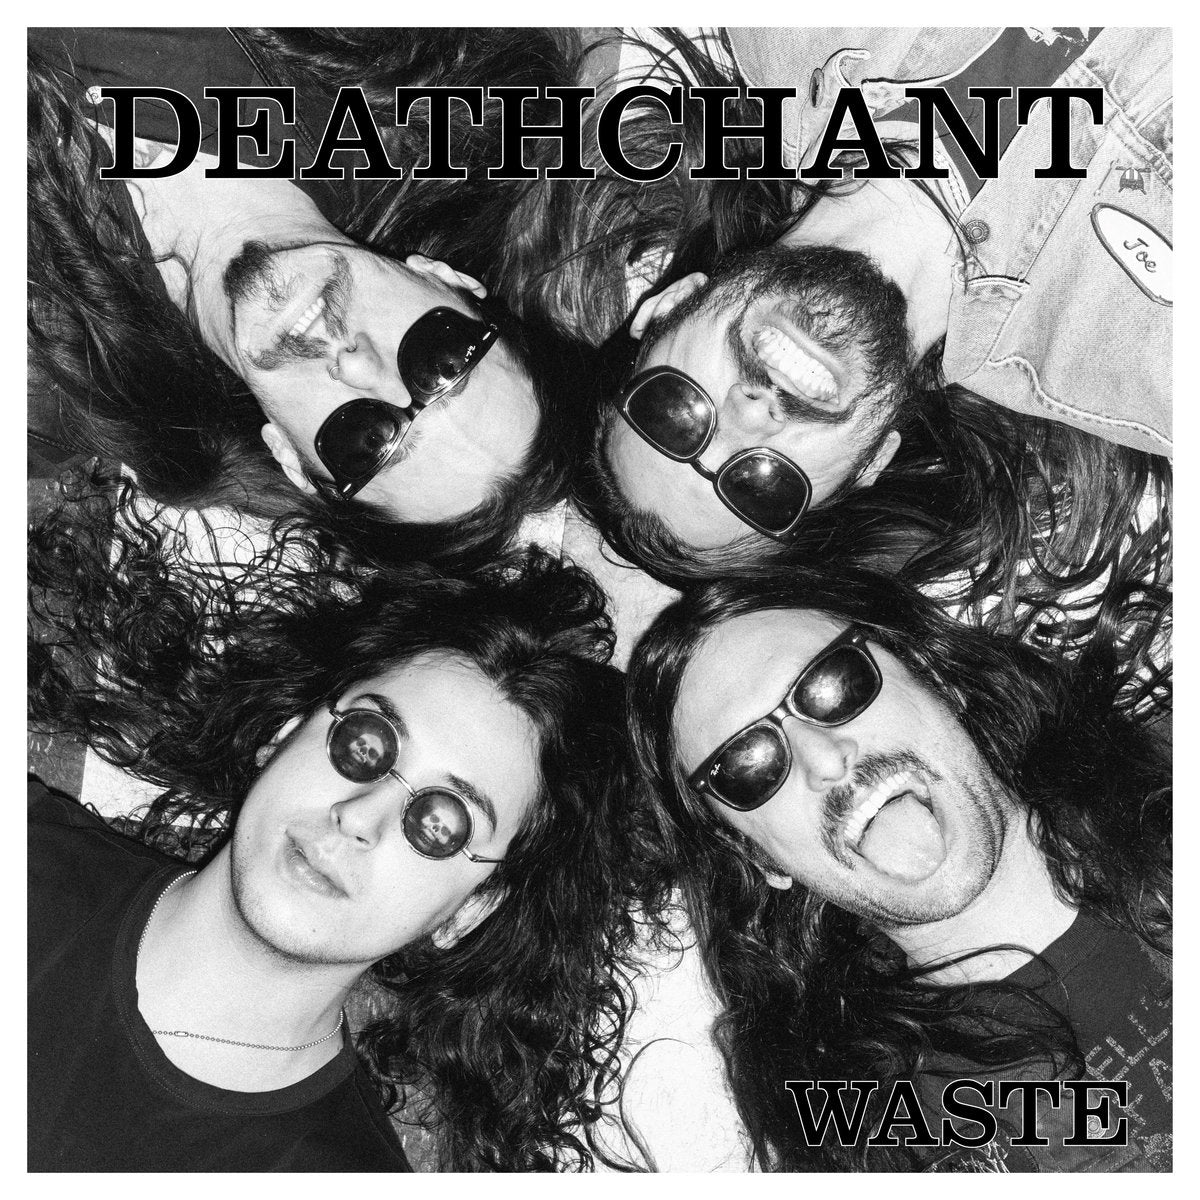 Arcade Sound - Deathchant - Waste - Col. LP / CD image